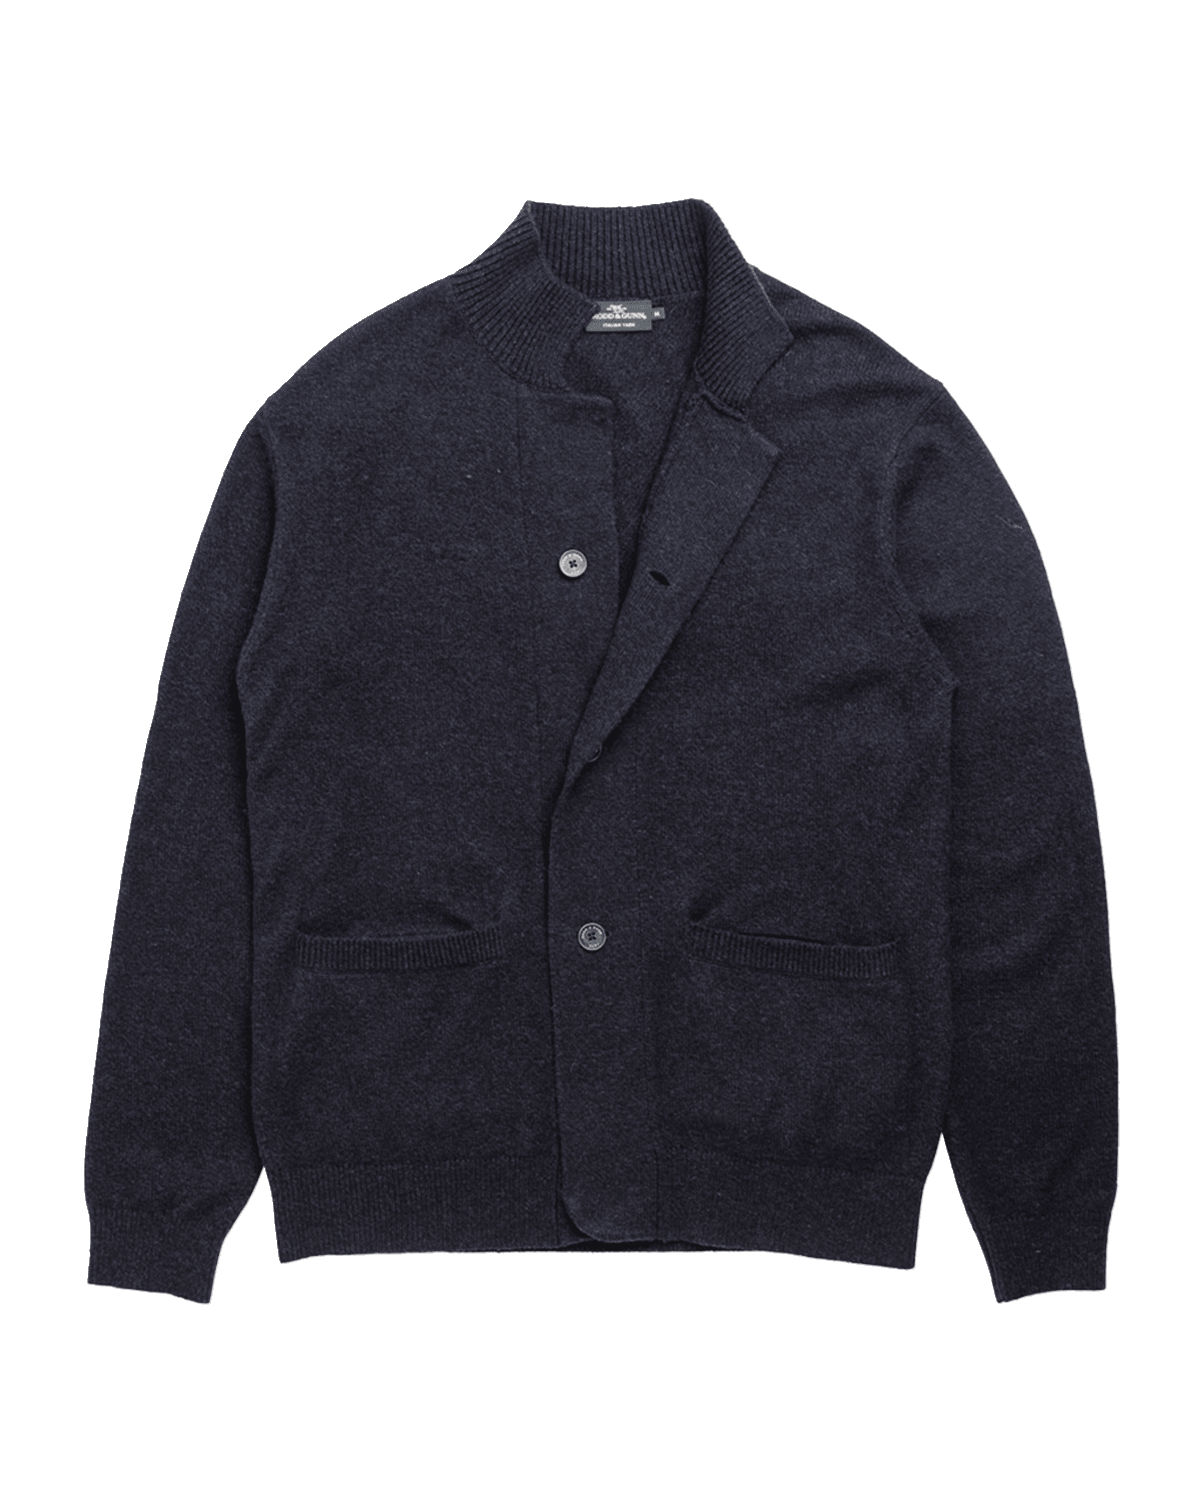 TOM FORD Men's Cashmere Shawl Collar Cardigan Sweater | Neiman Marcus